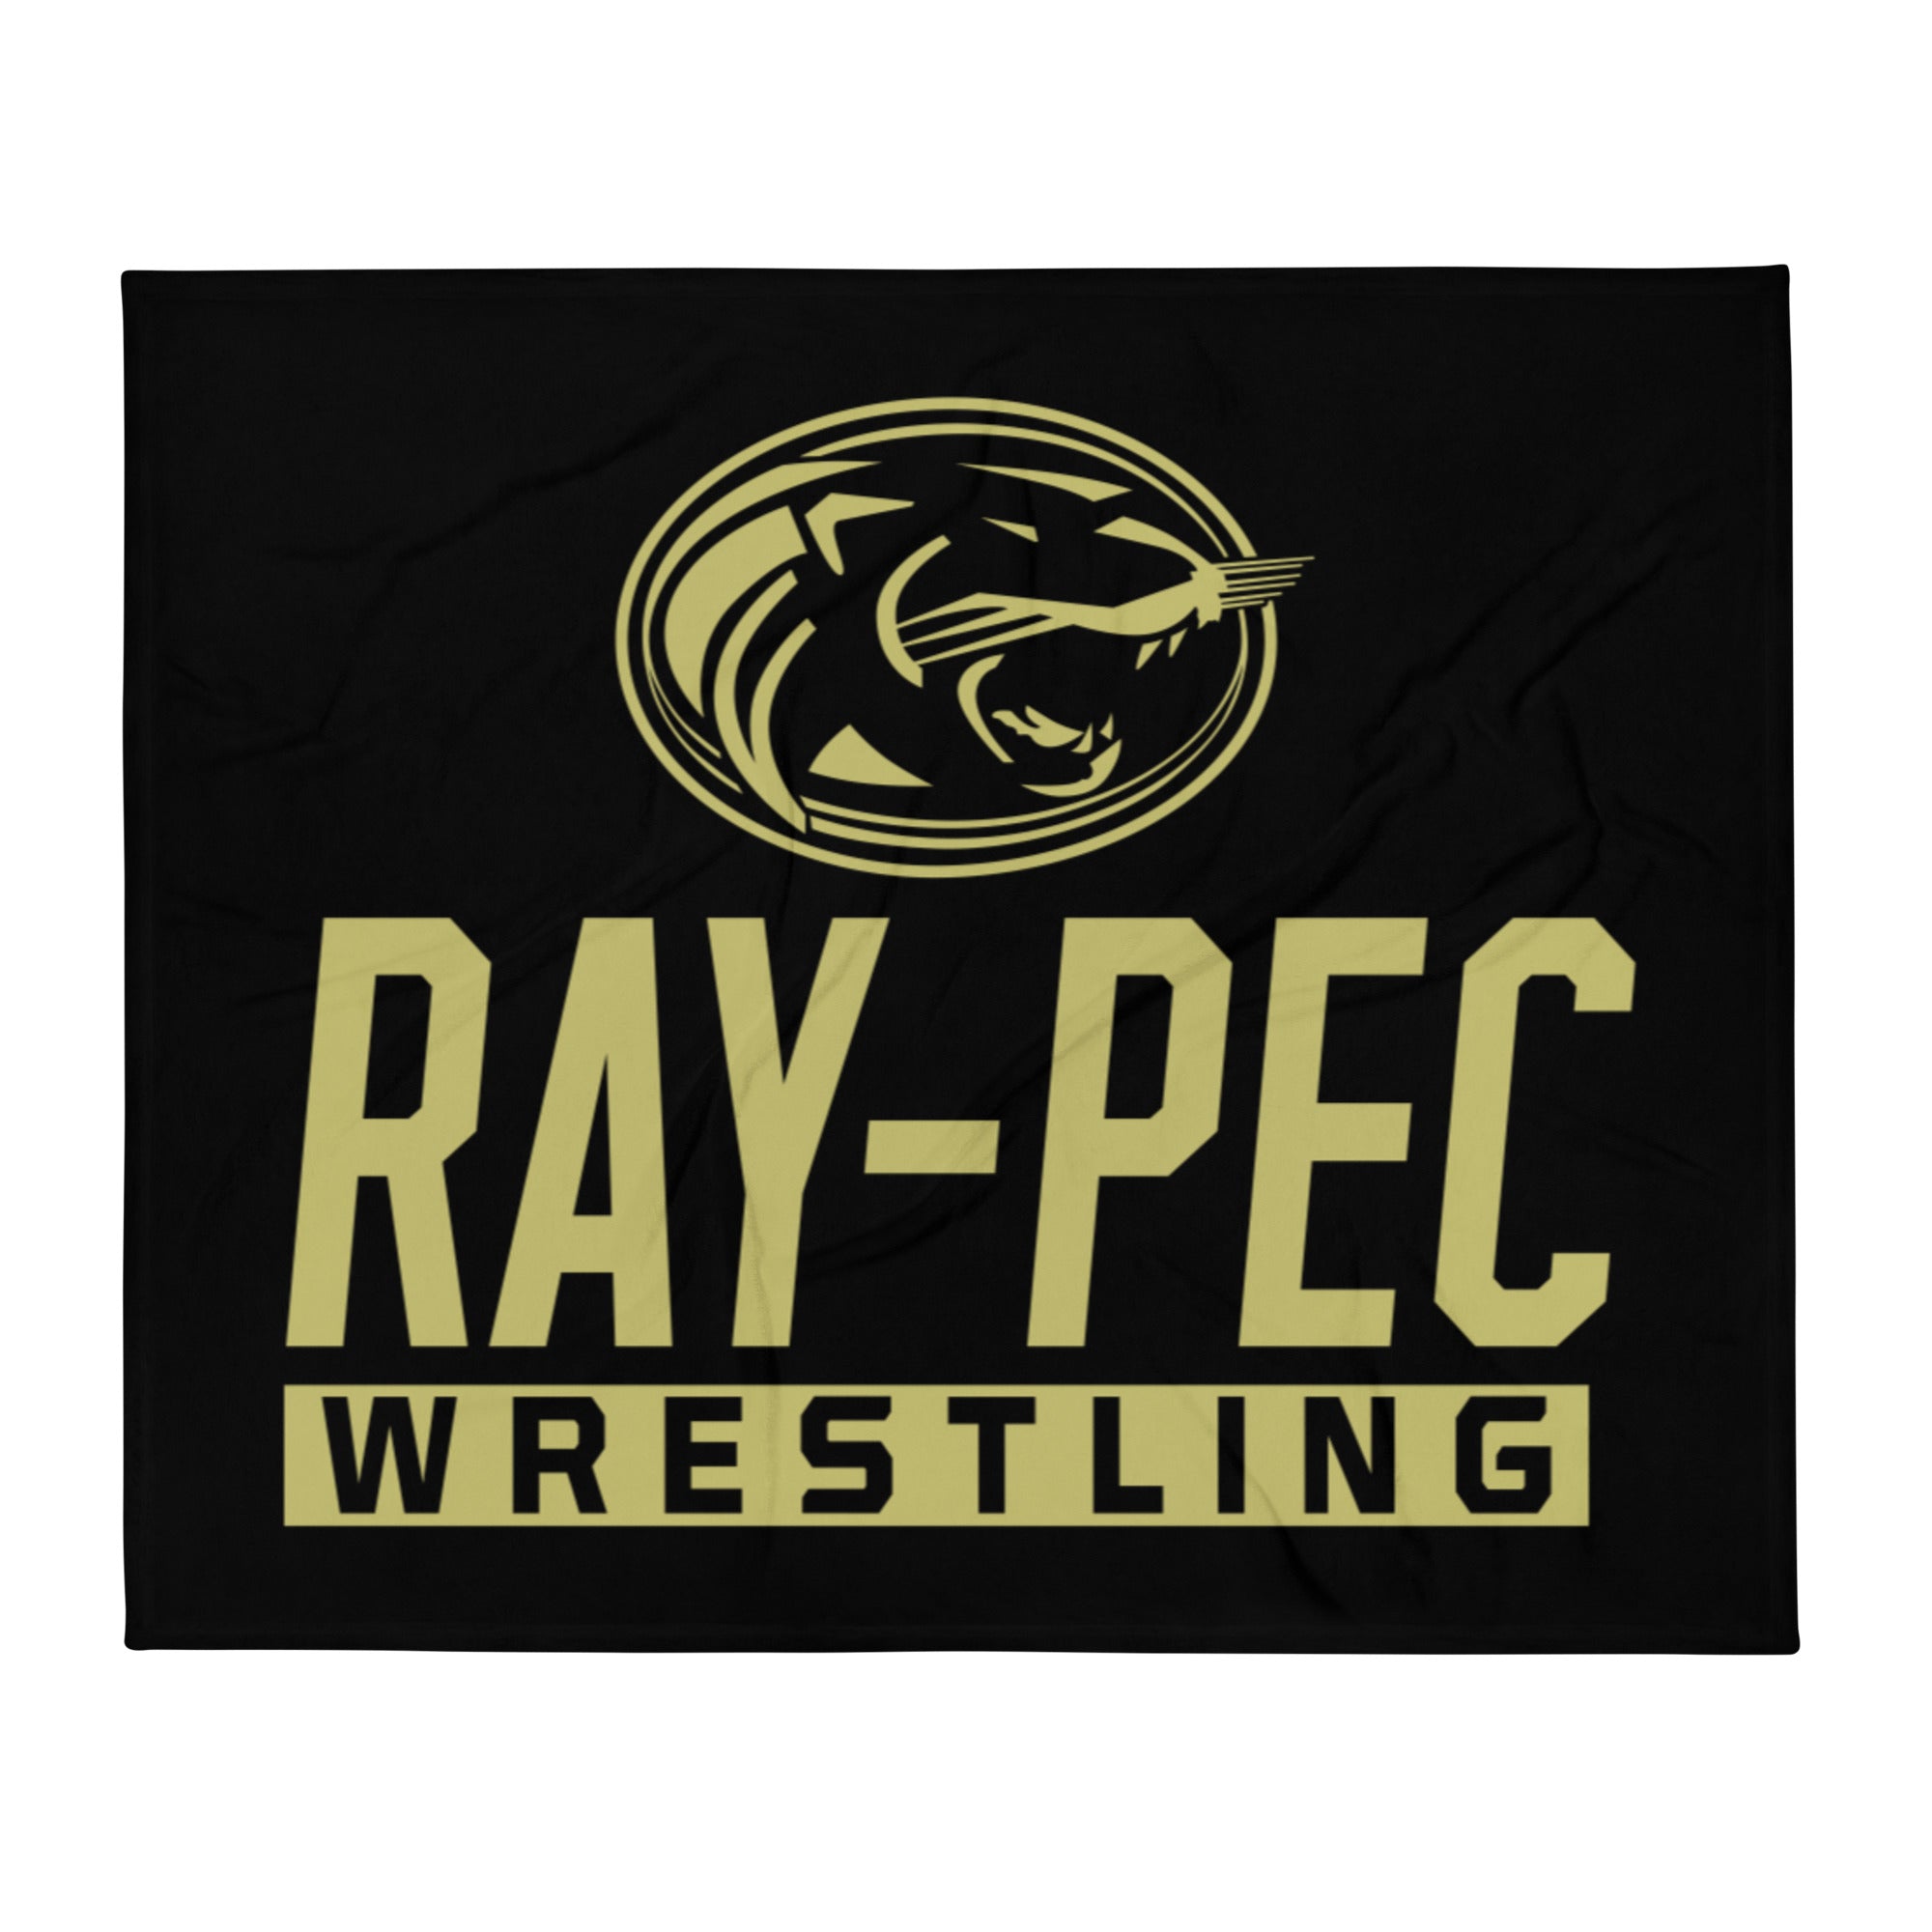 Ray Pec Wrestling Throw Blanket 50 x 60